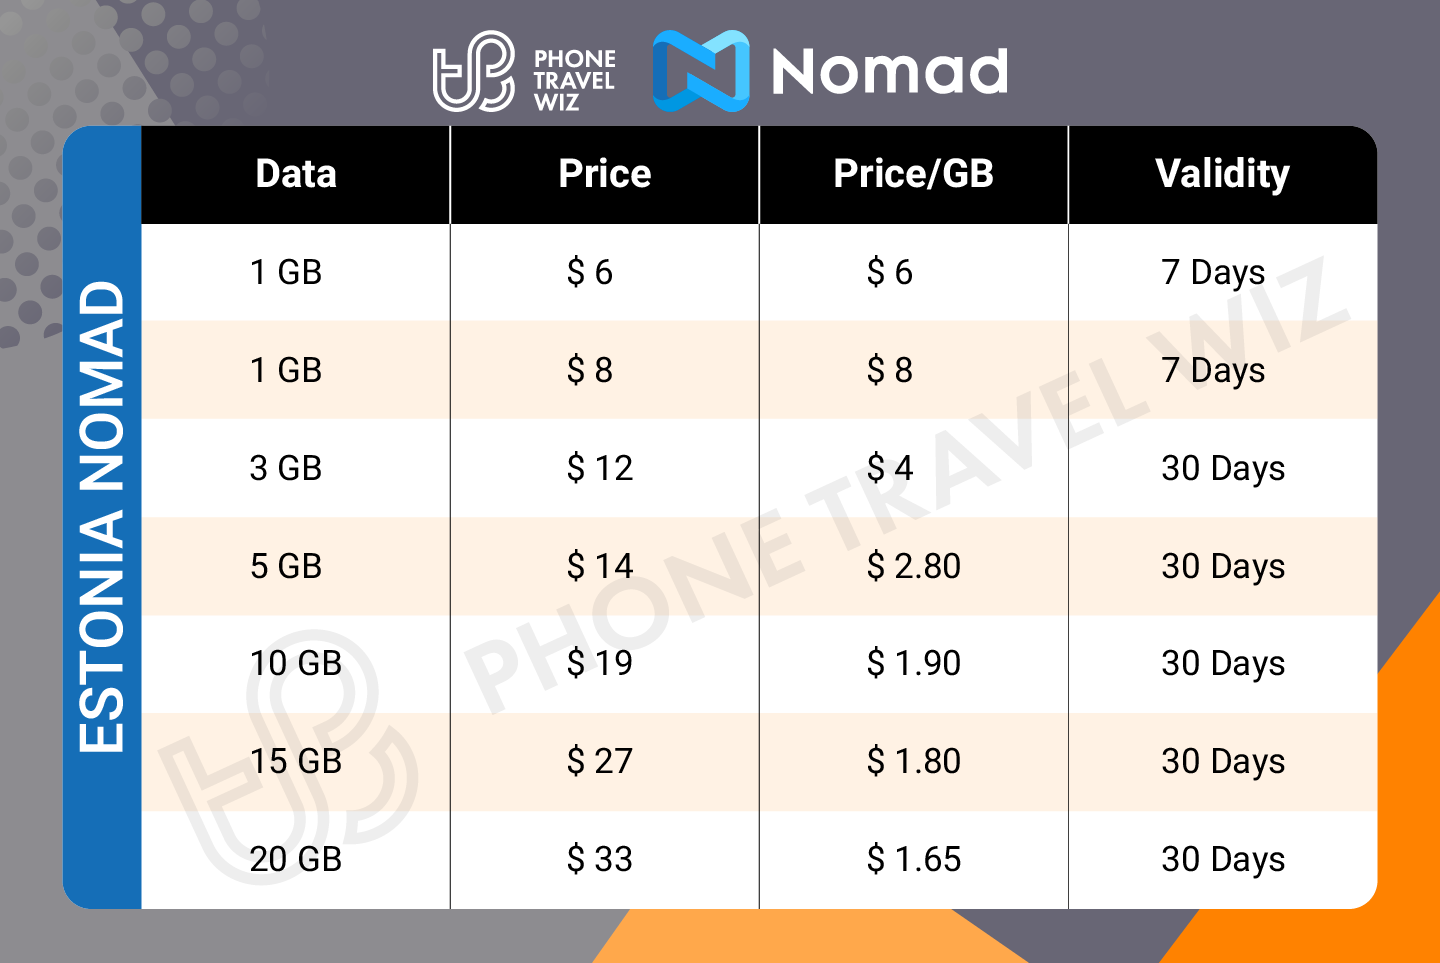 Nomad Estonia eSIM Price & Data Details Infographic by Phone Travel Wiz